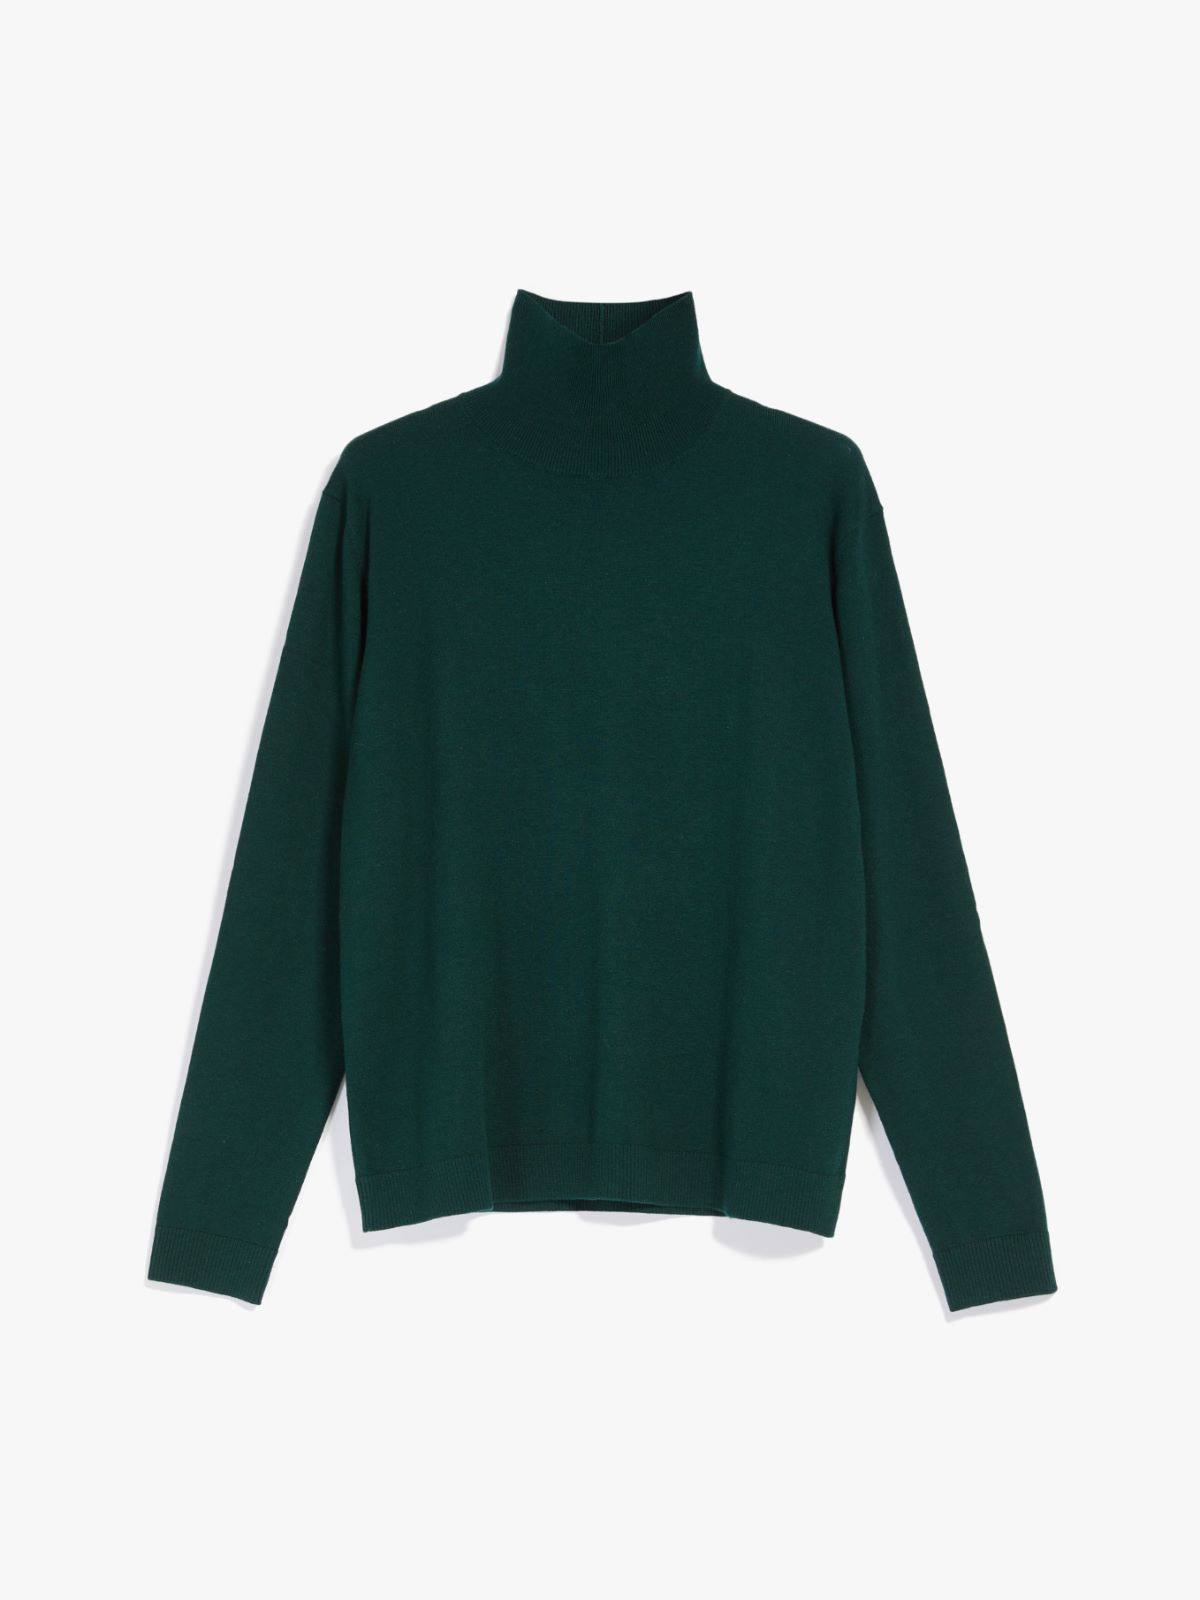 Silk and wool sweater - MOSS GREEN - Weekend Max Mara - 6